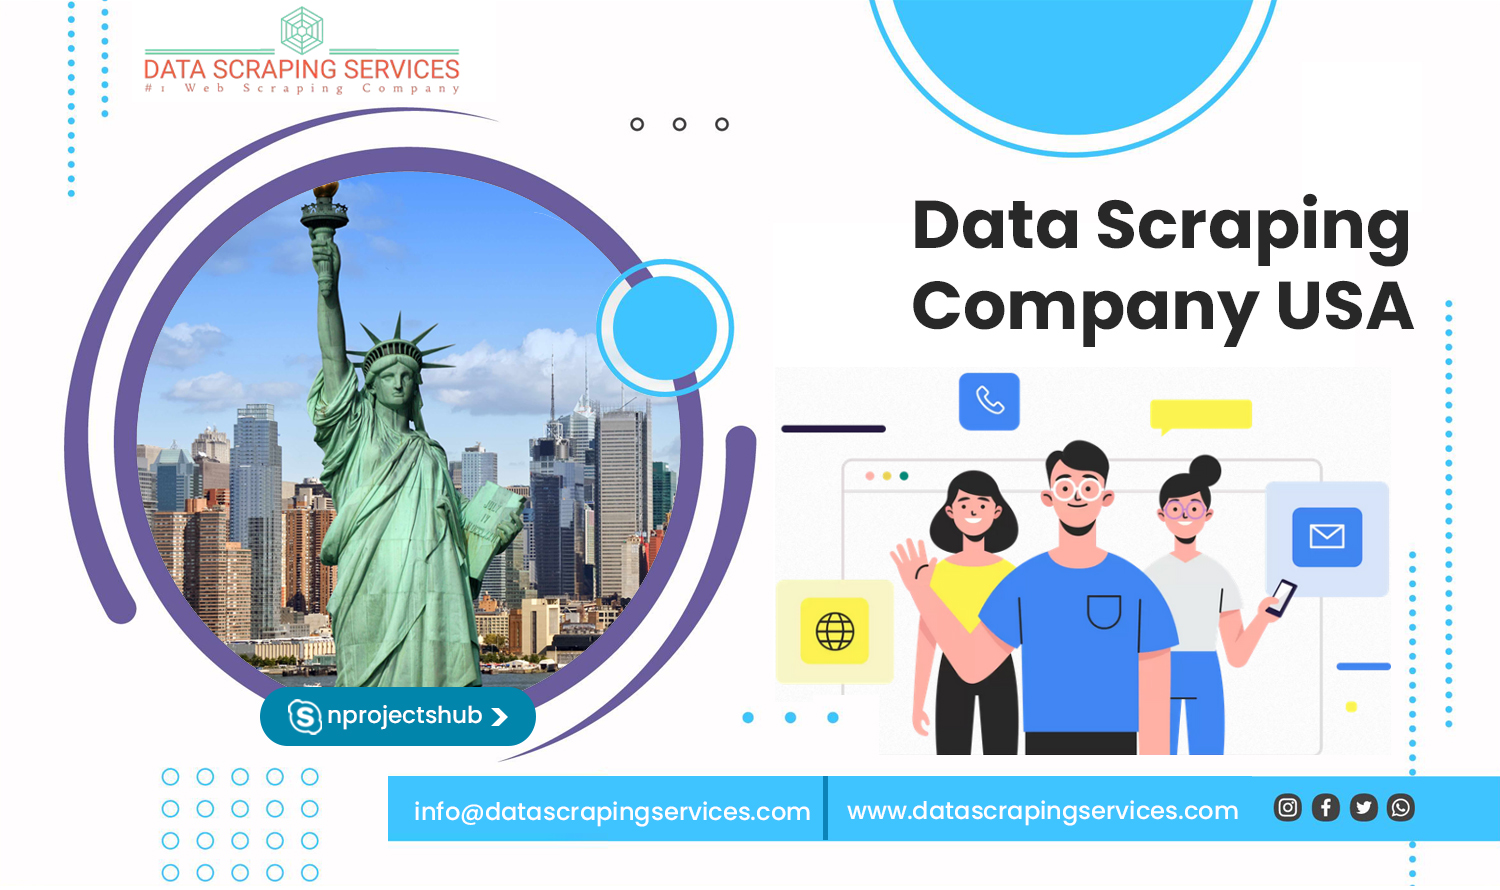 Data Scraping Company USA